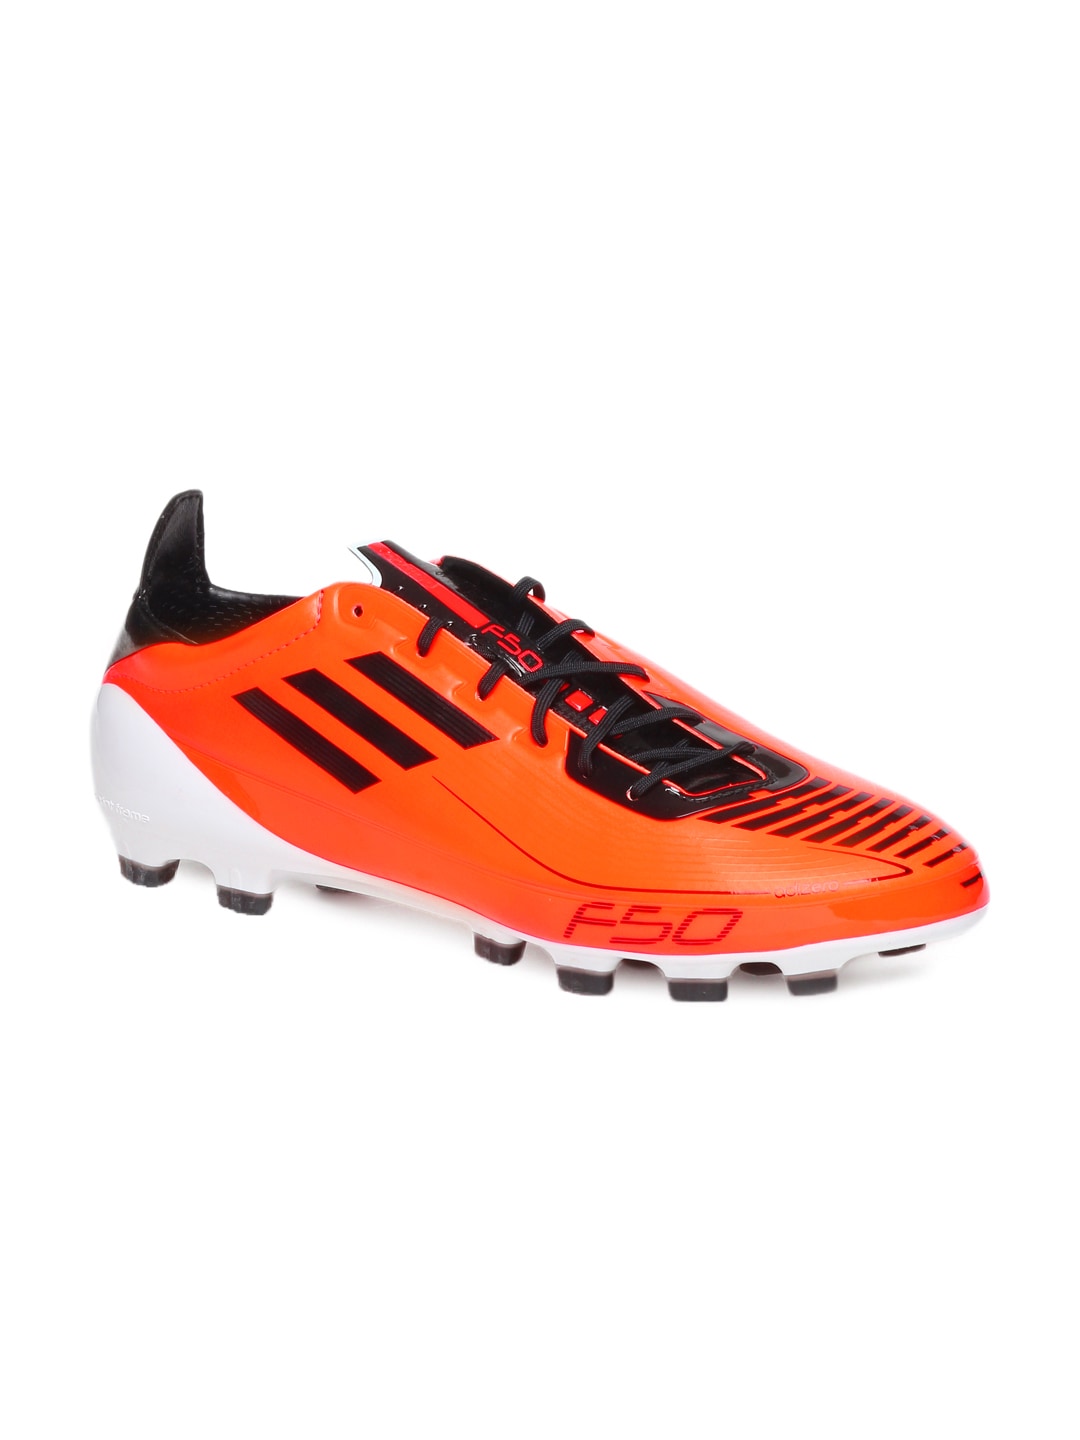 ADIDAS Men Orange F50 Adizero HG Football Shoes